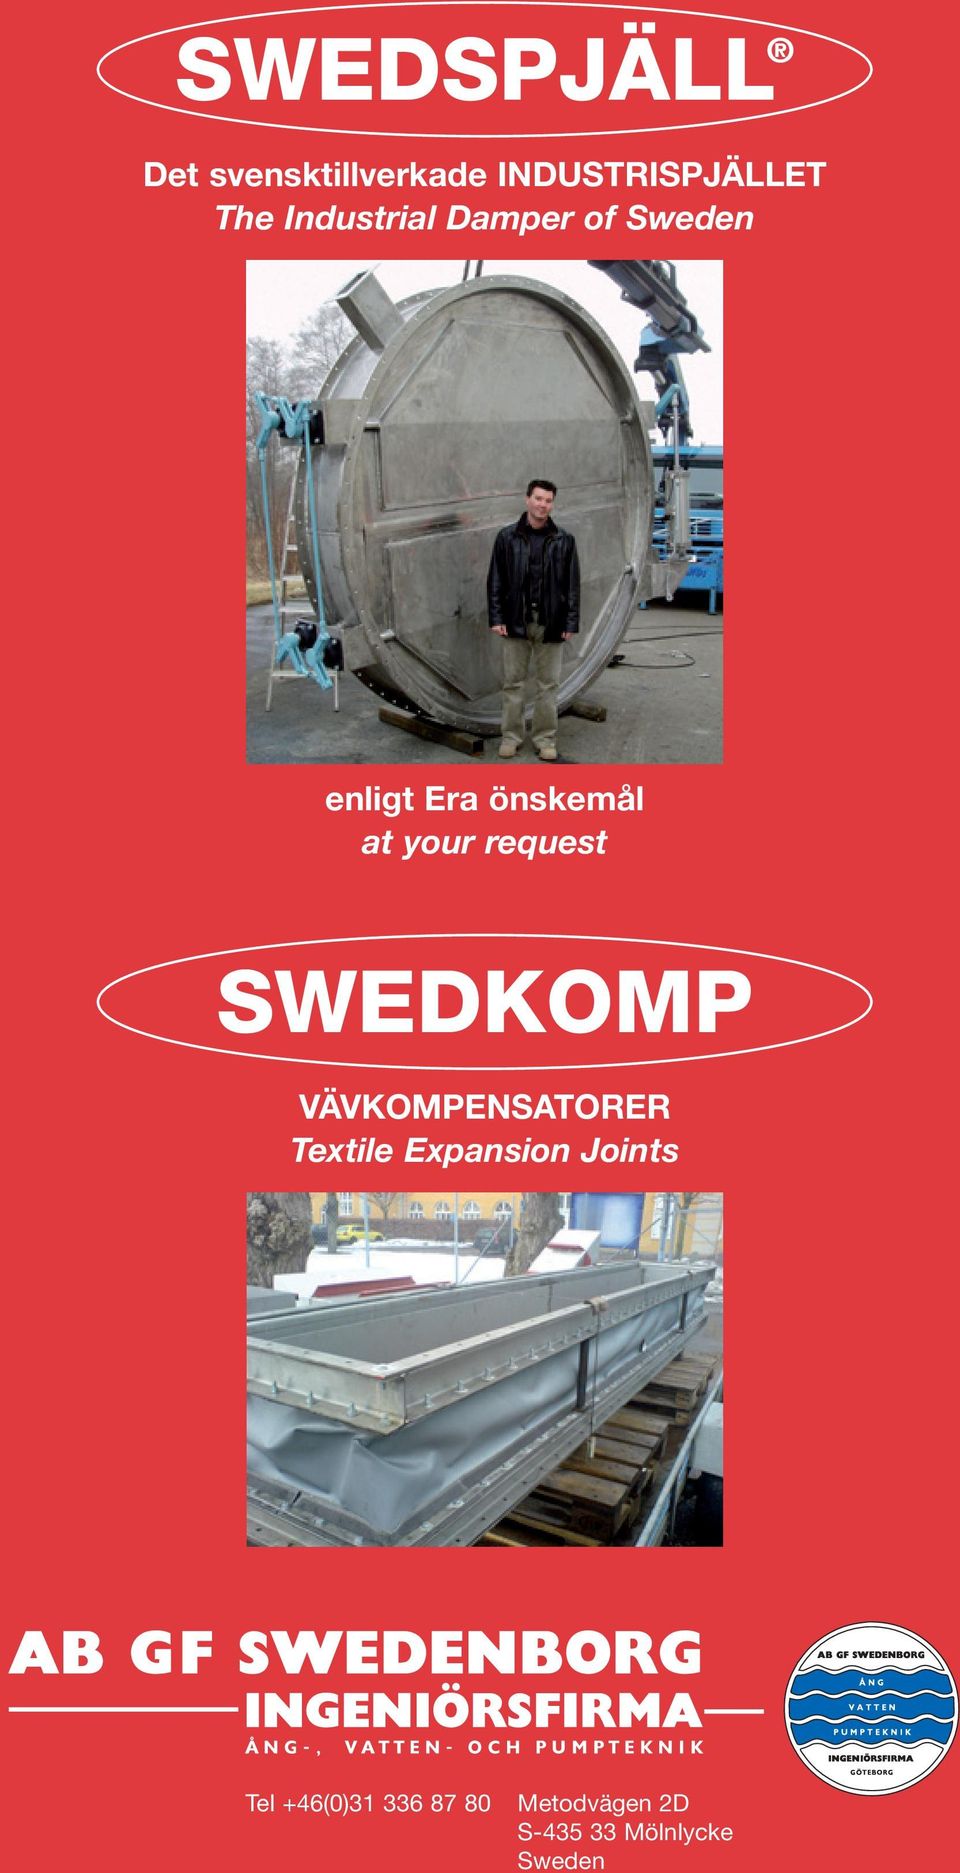 request SWEDKOMP VÄVKOMPENSATORER Textile Expansion